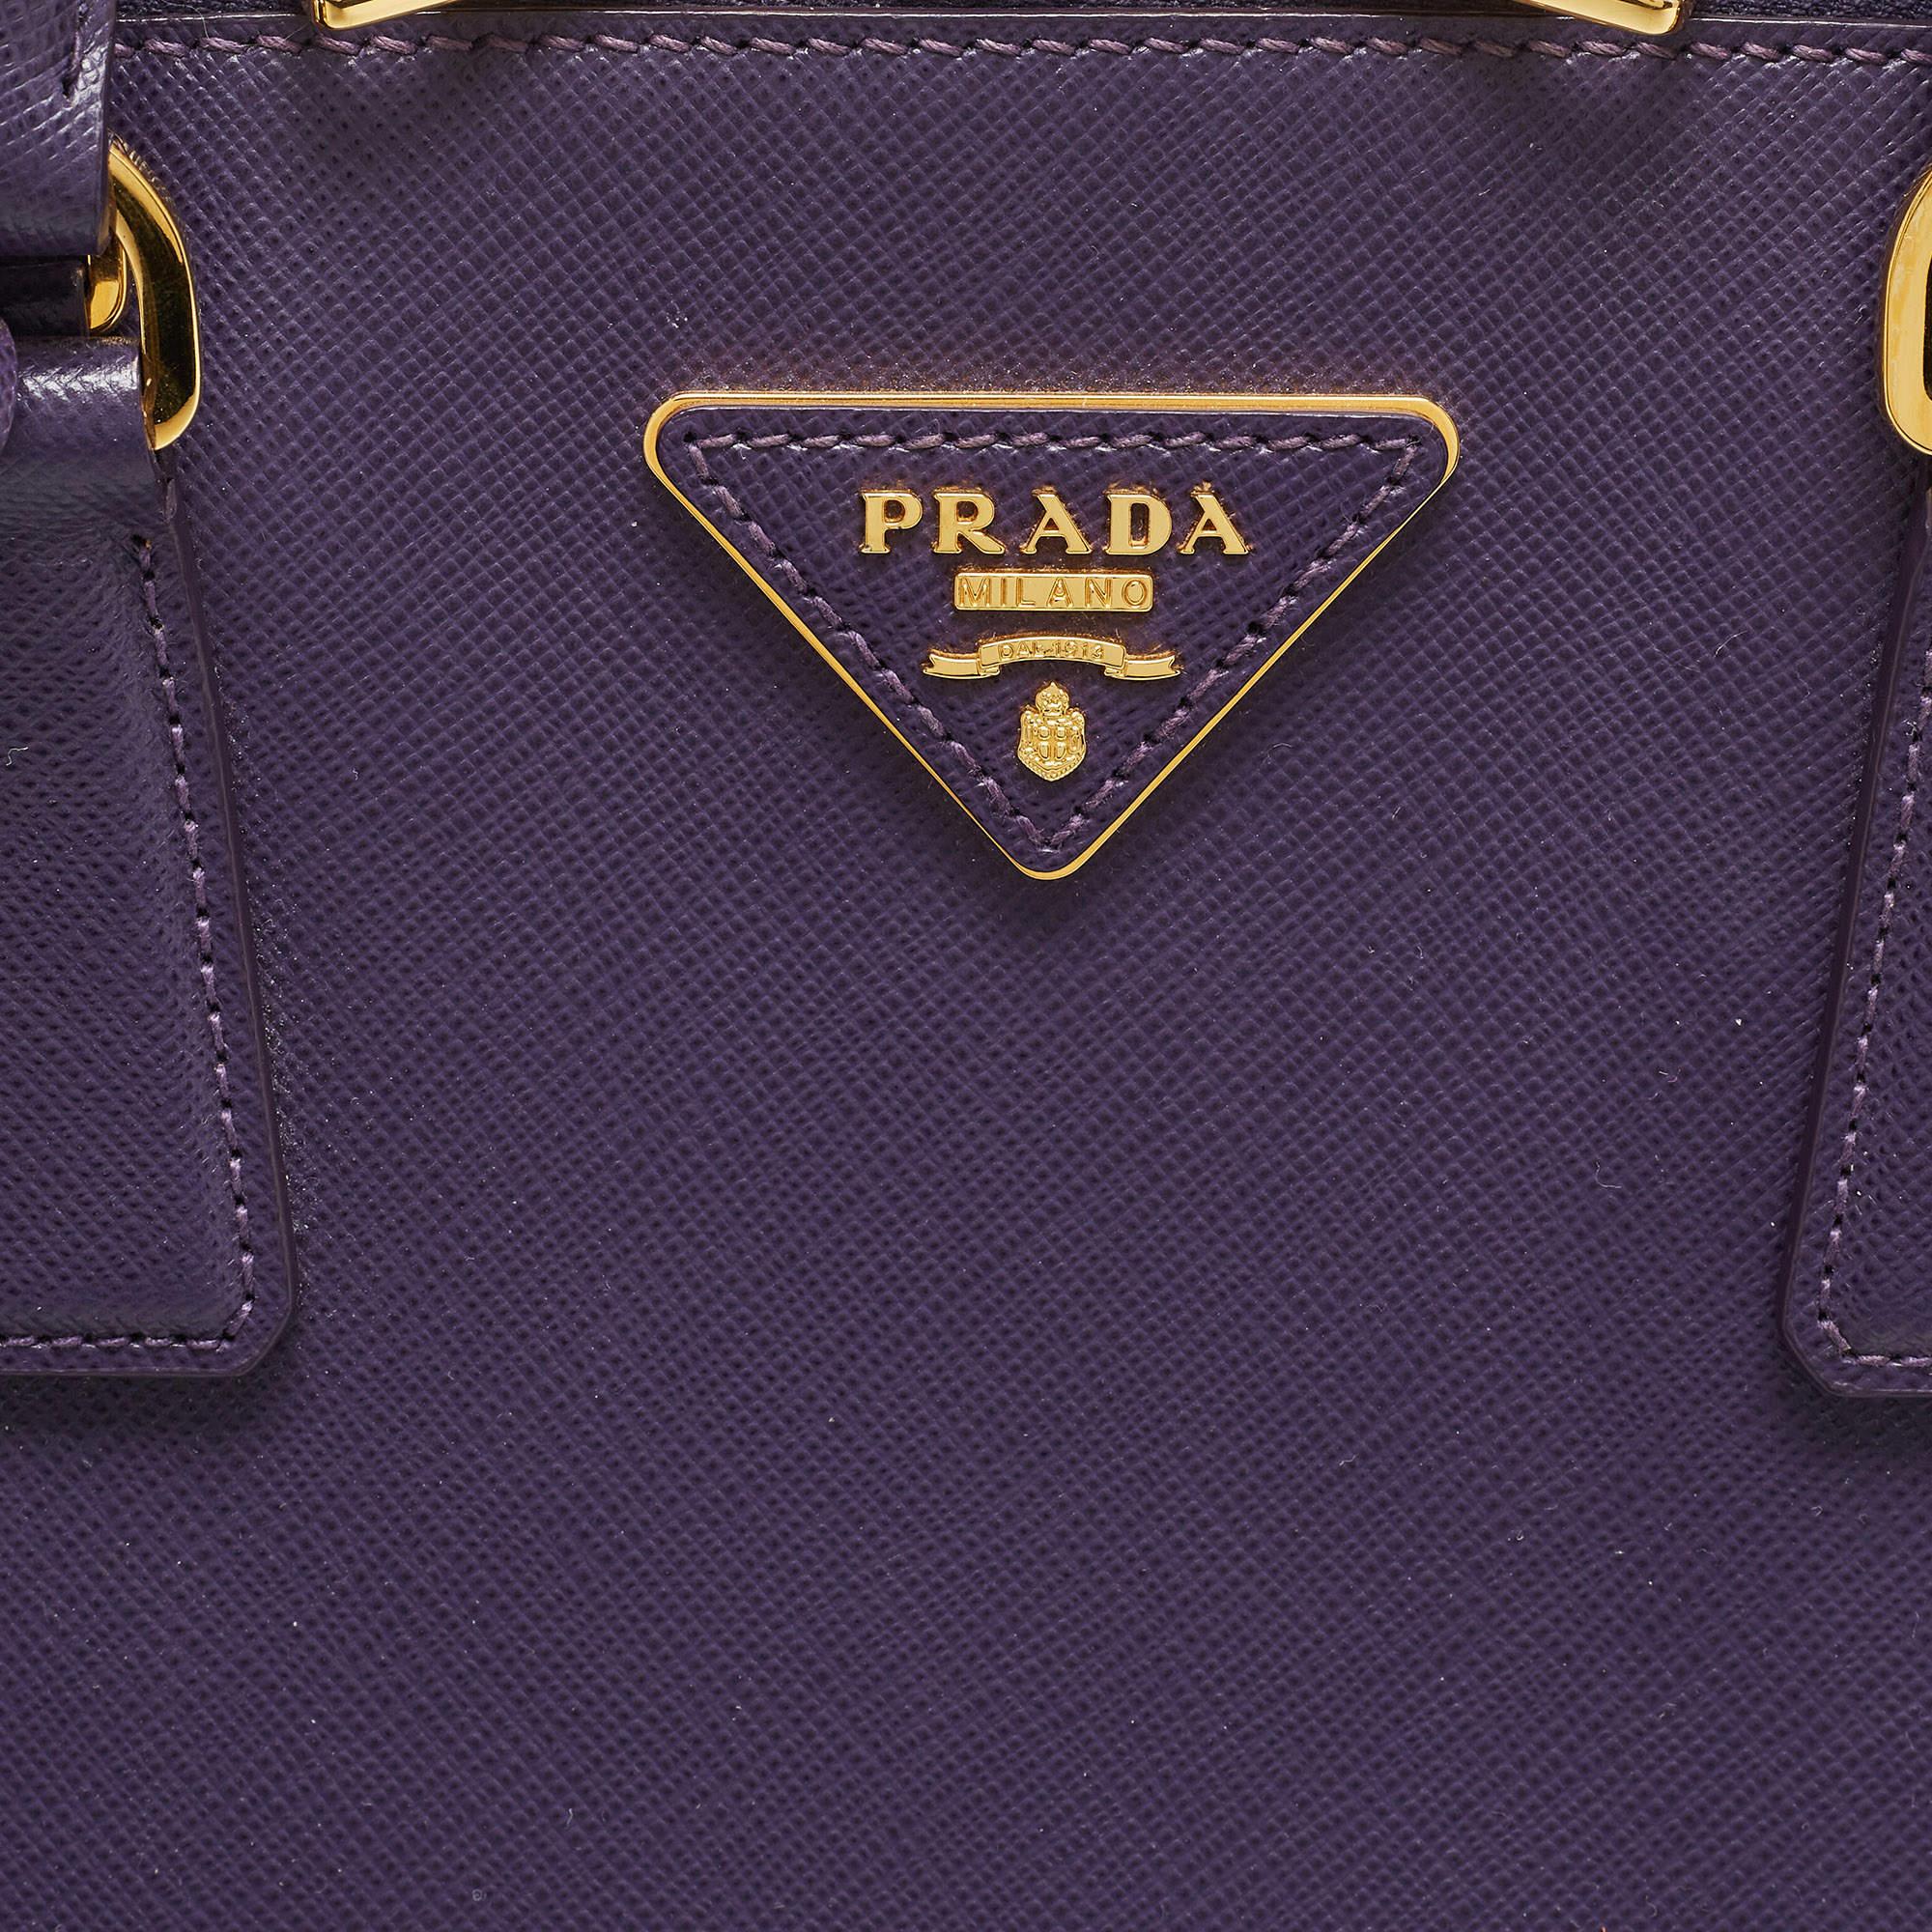 Sac à main Prada Saffiano Lux en cuir violet Promenade de taille moyenne 5